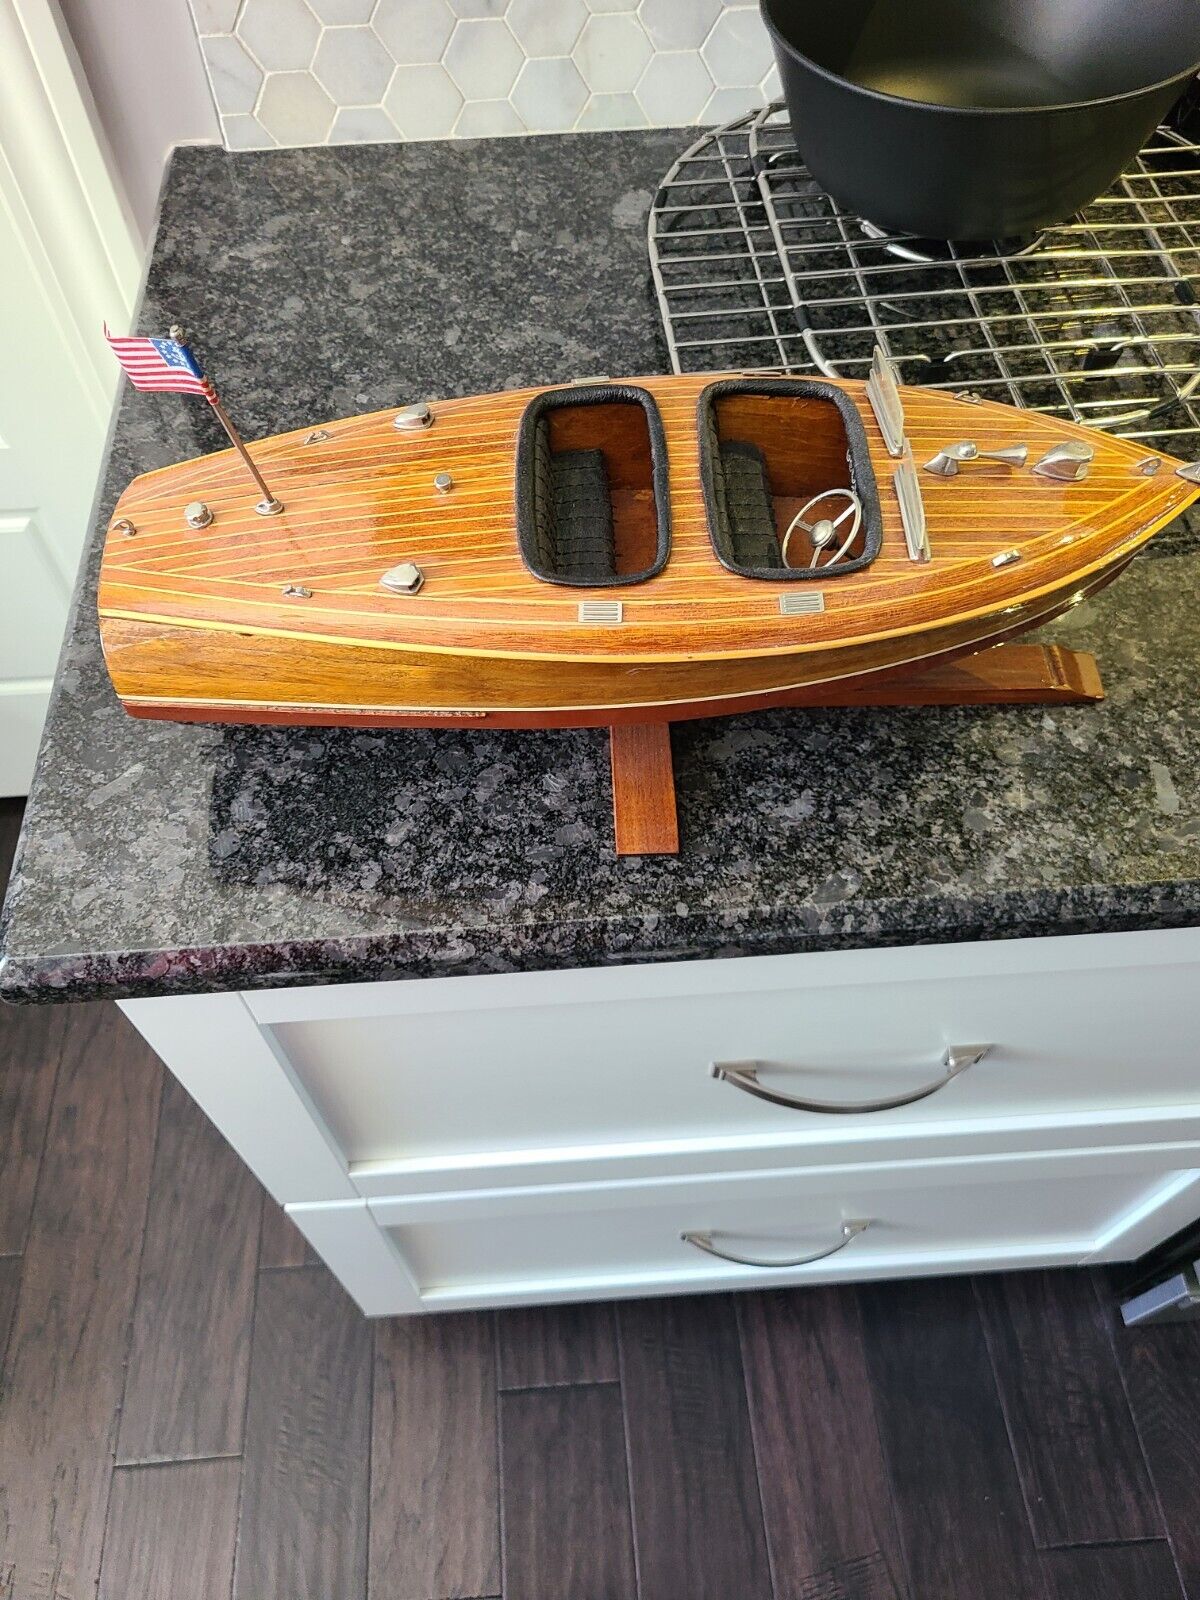 Riva Style Wooden Cruising Boat